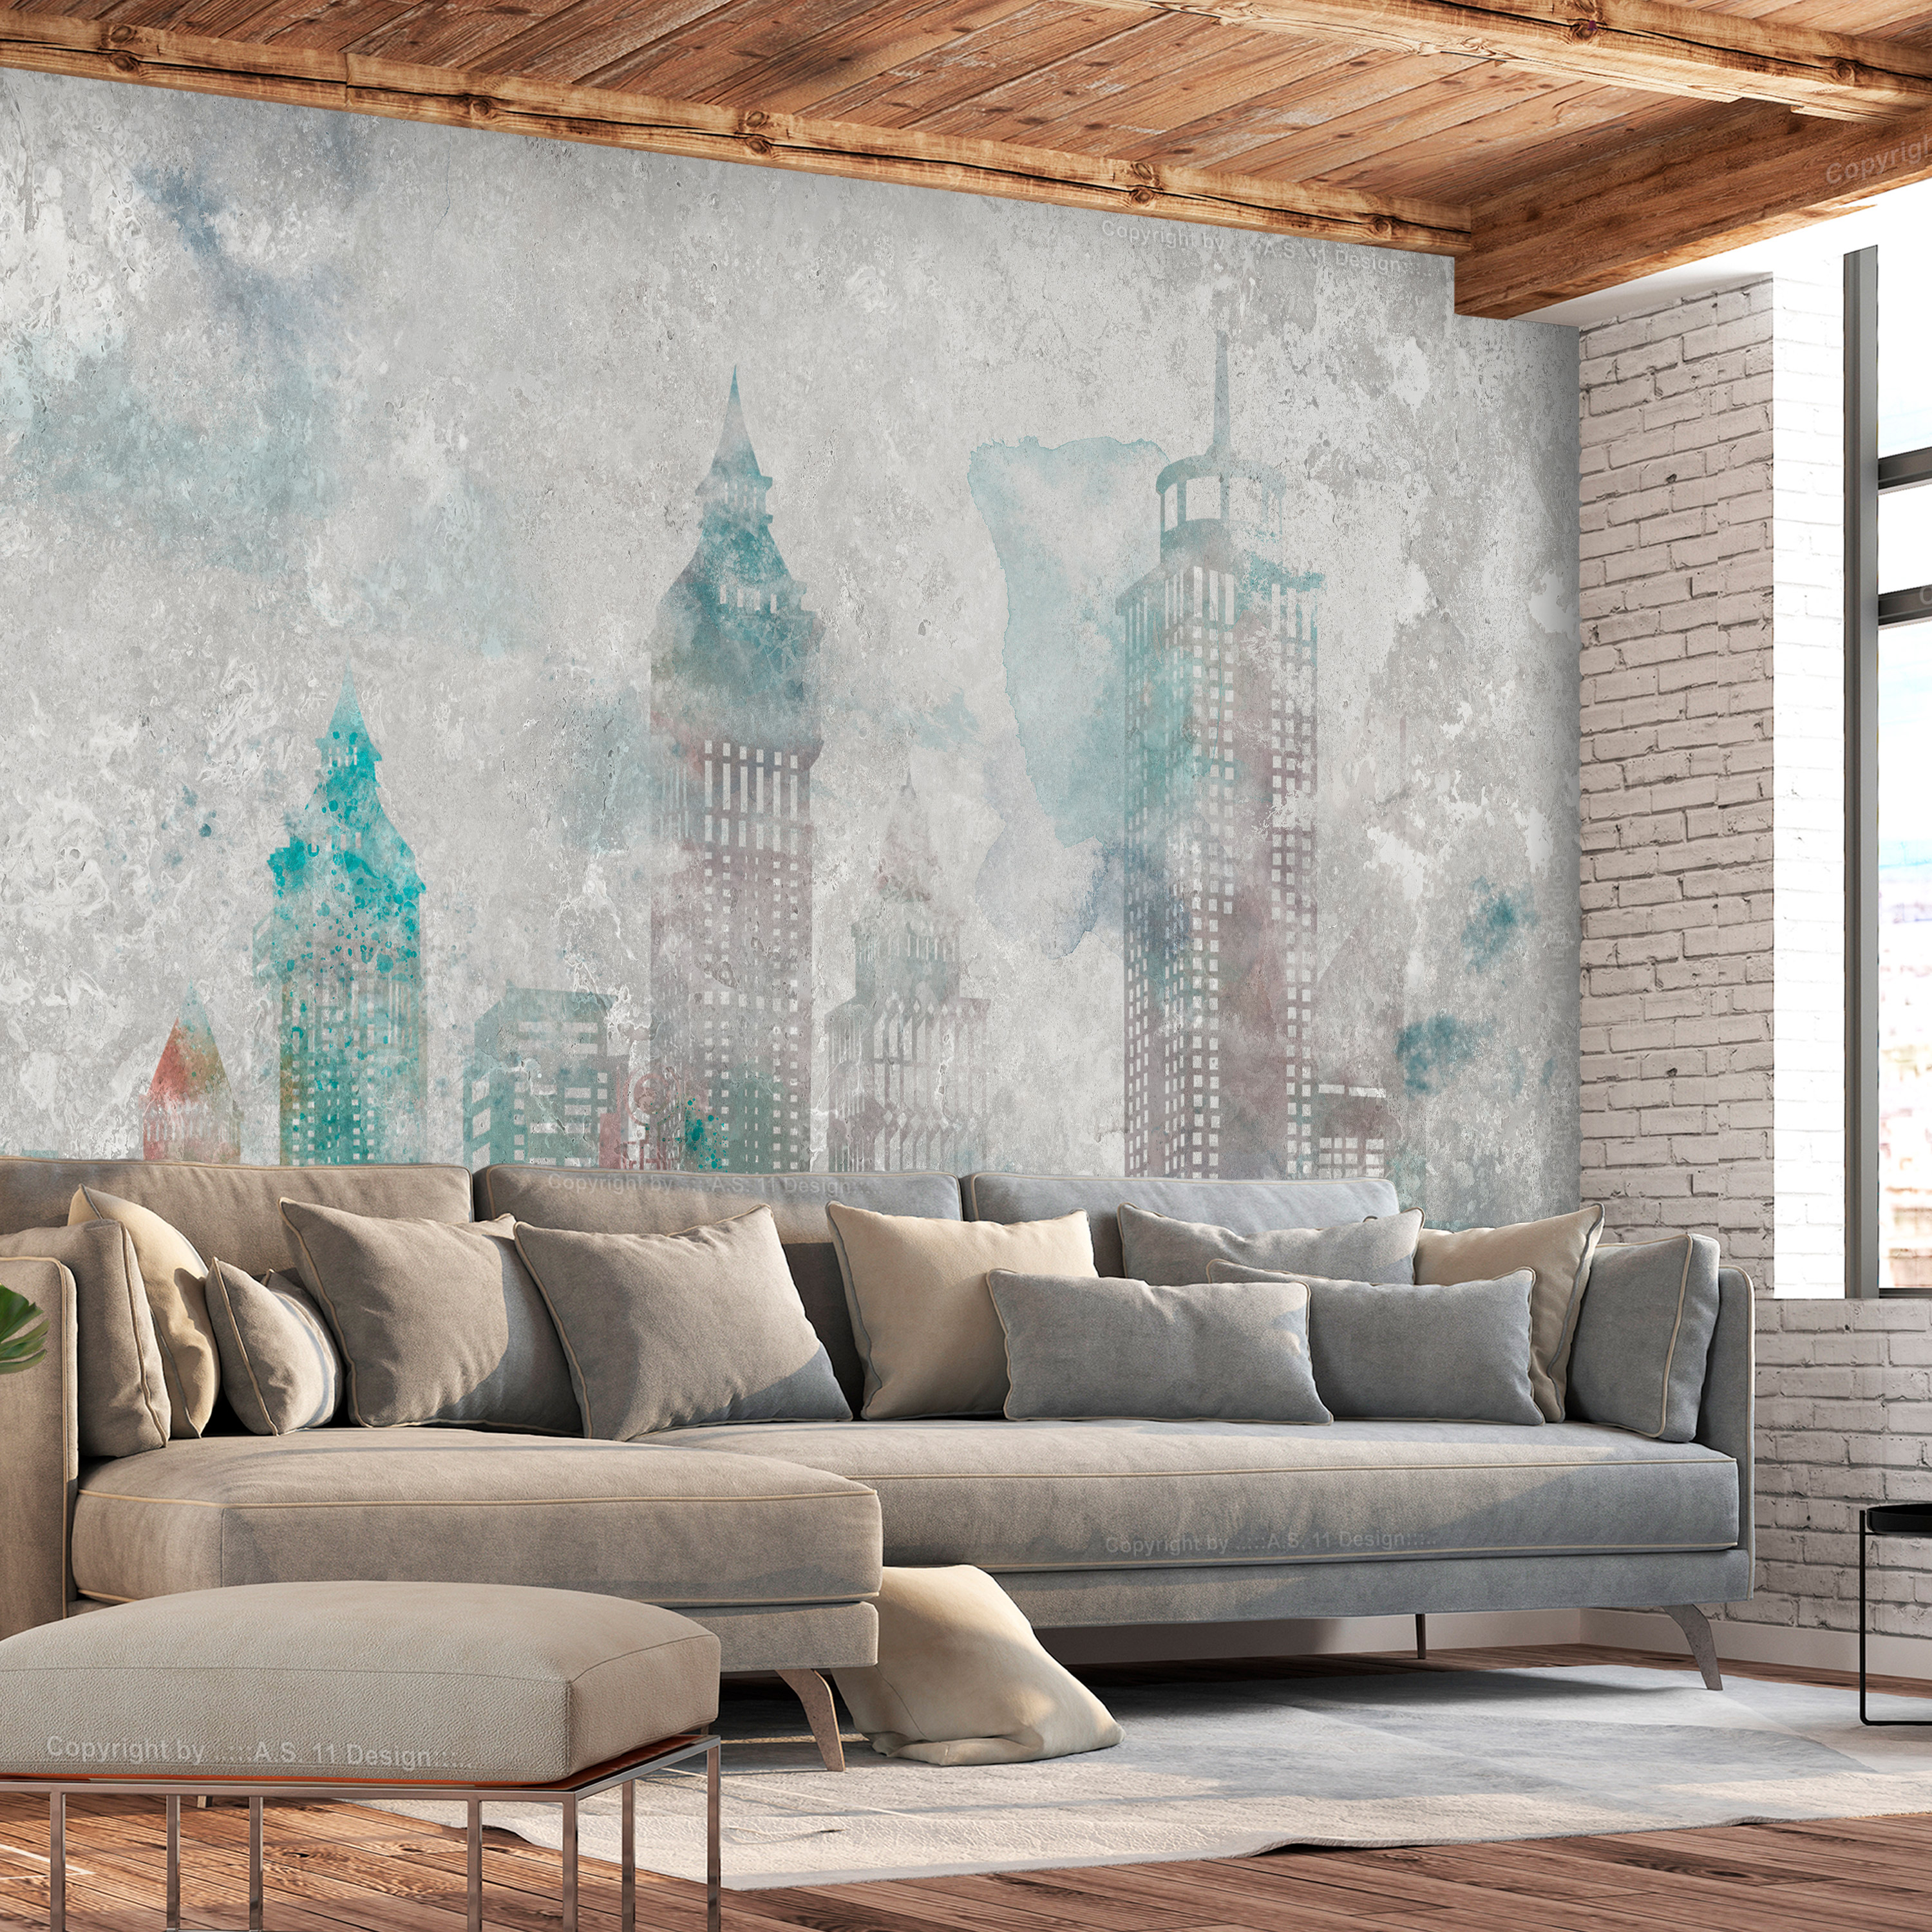 self-adhesive-wallpaper-watercolour-city-196x140-267221